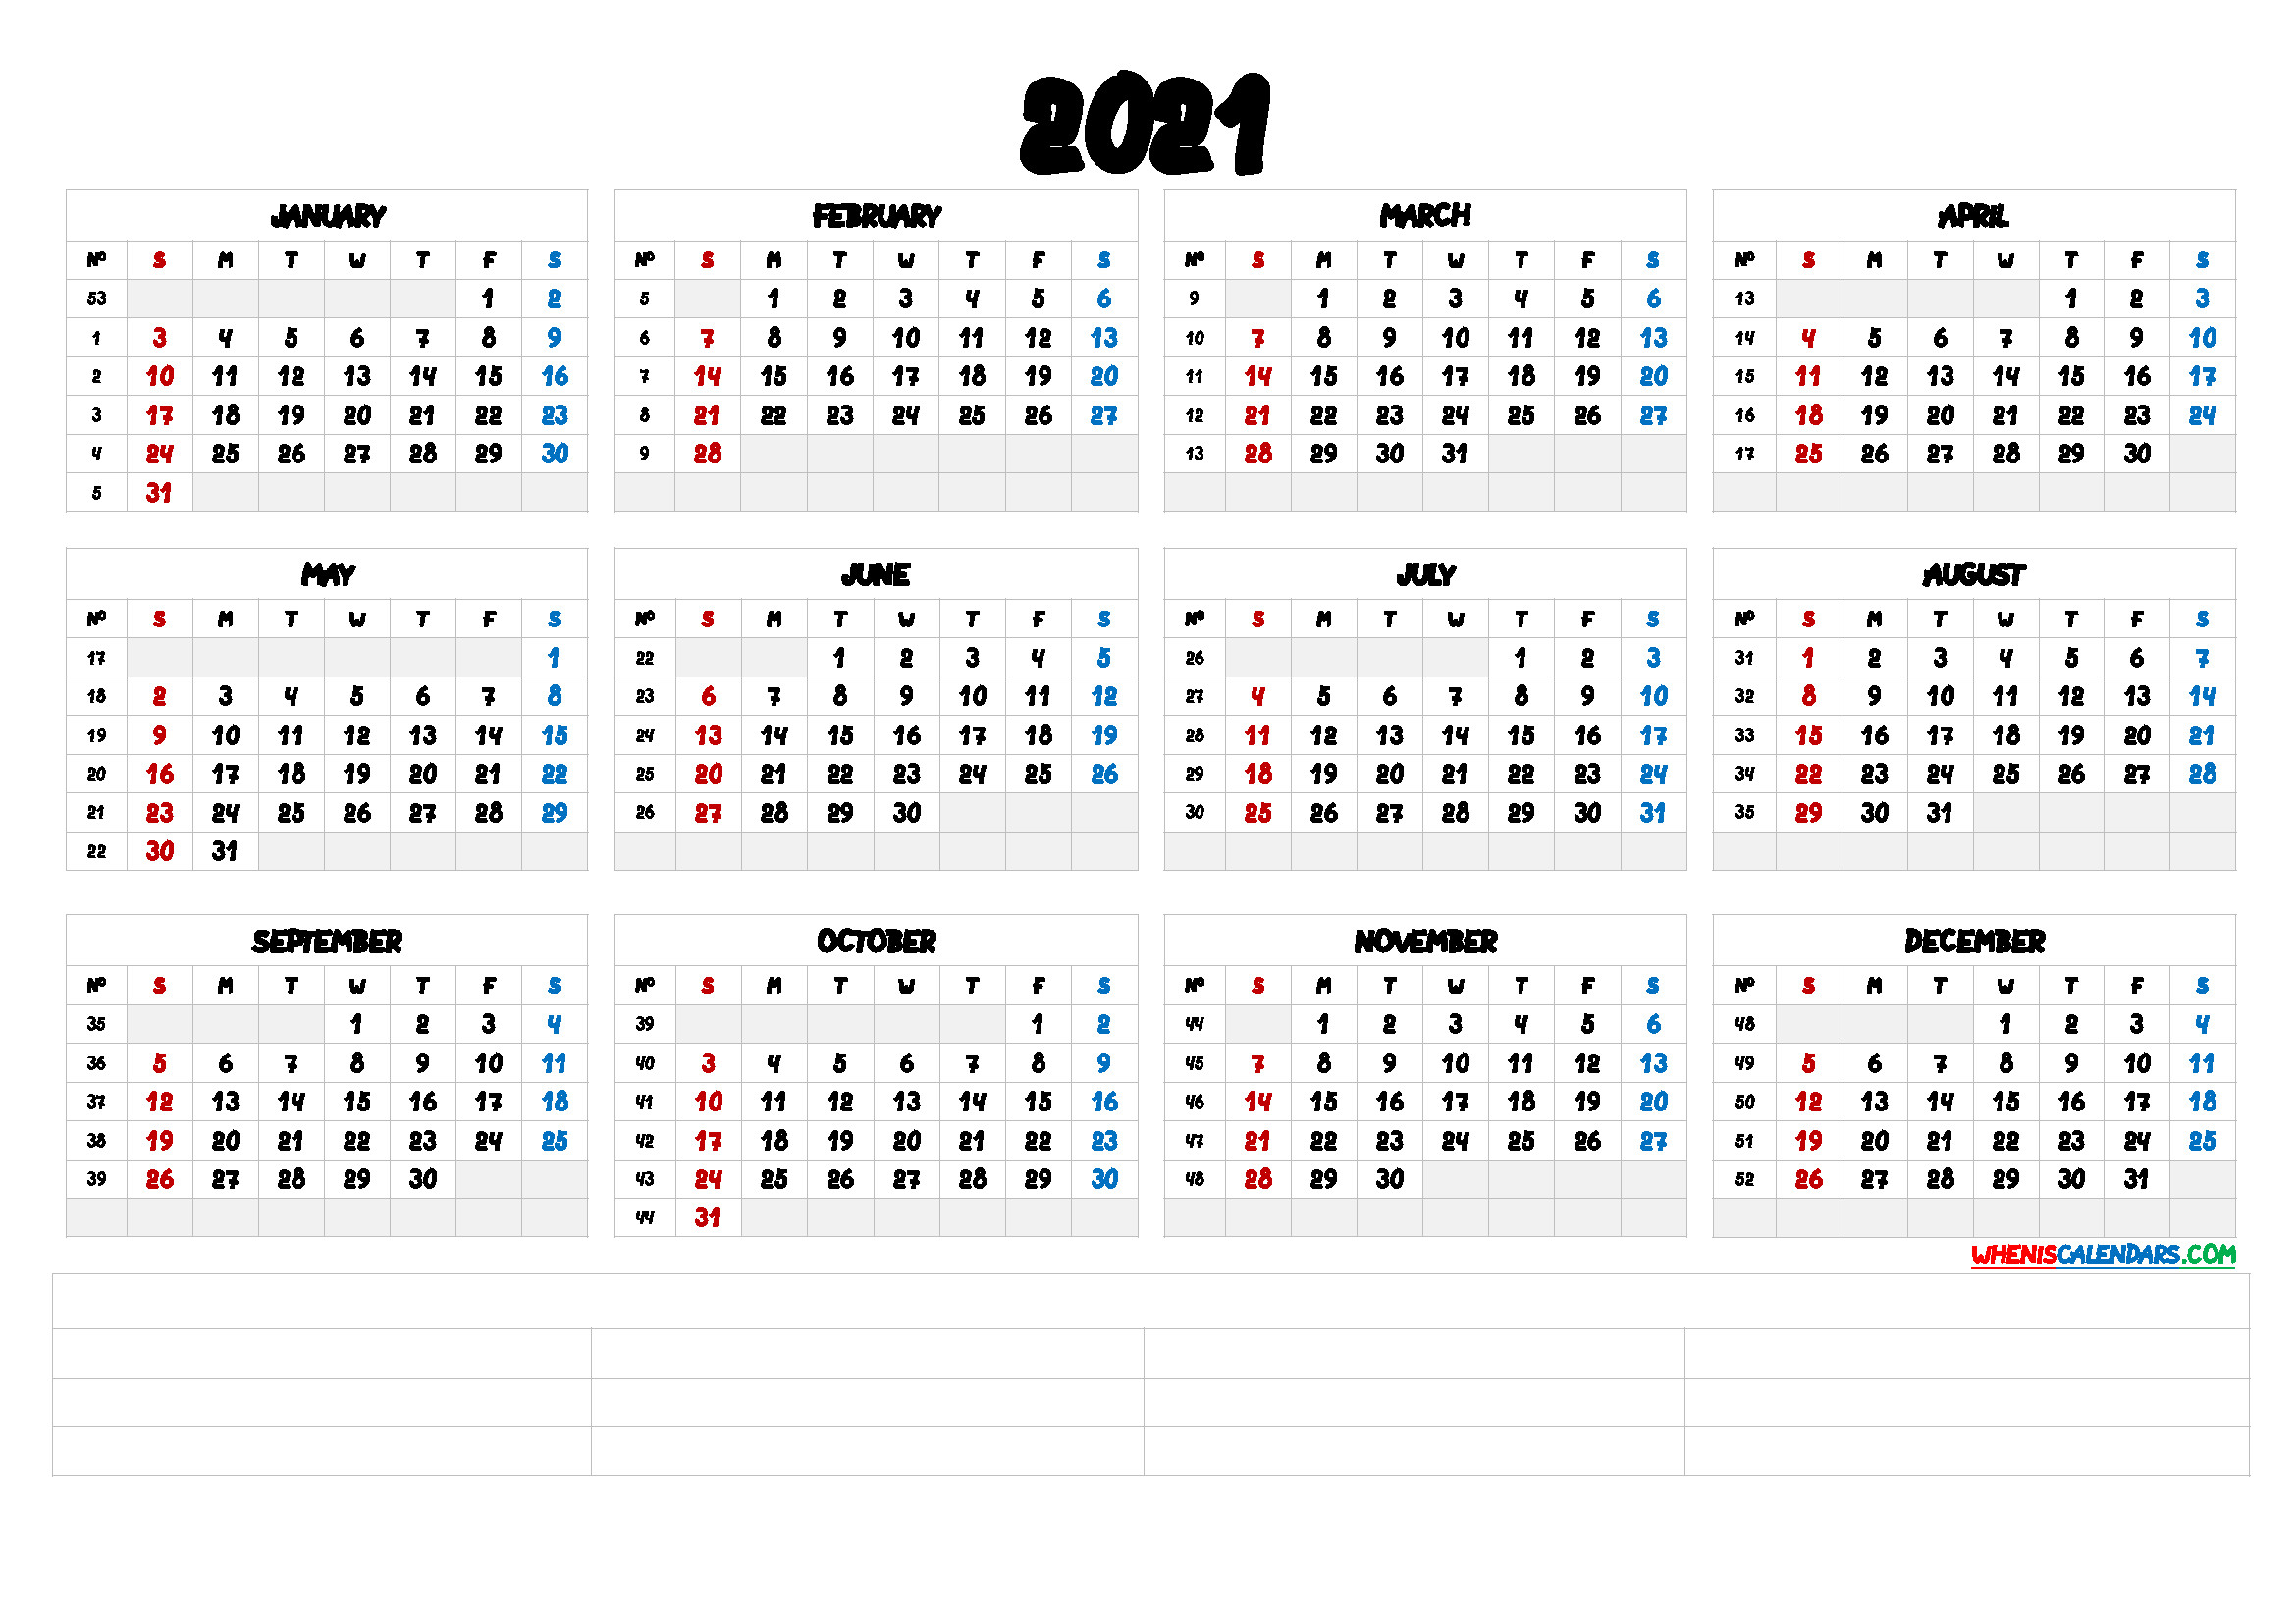 2021 12 Month Printable Calendar Free - Calendar 2021 Png-Free Online Printable 2021 Calendar 12 Month